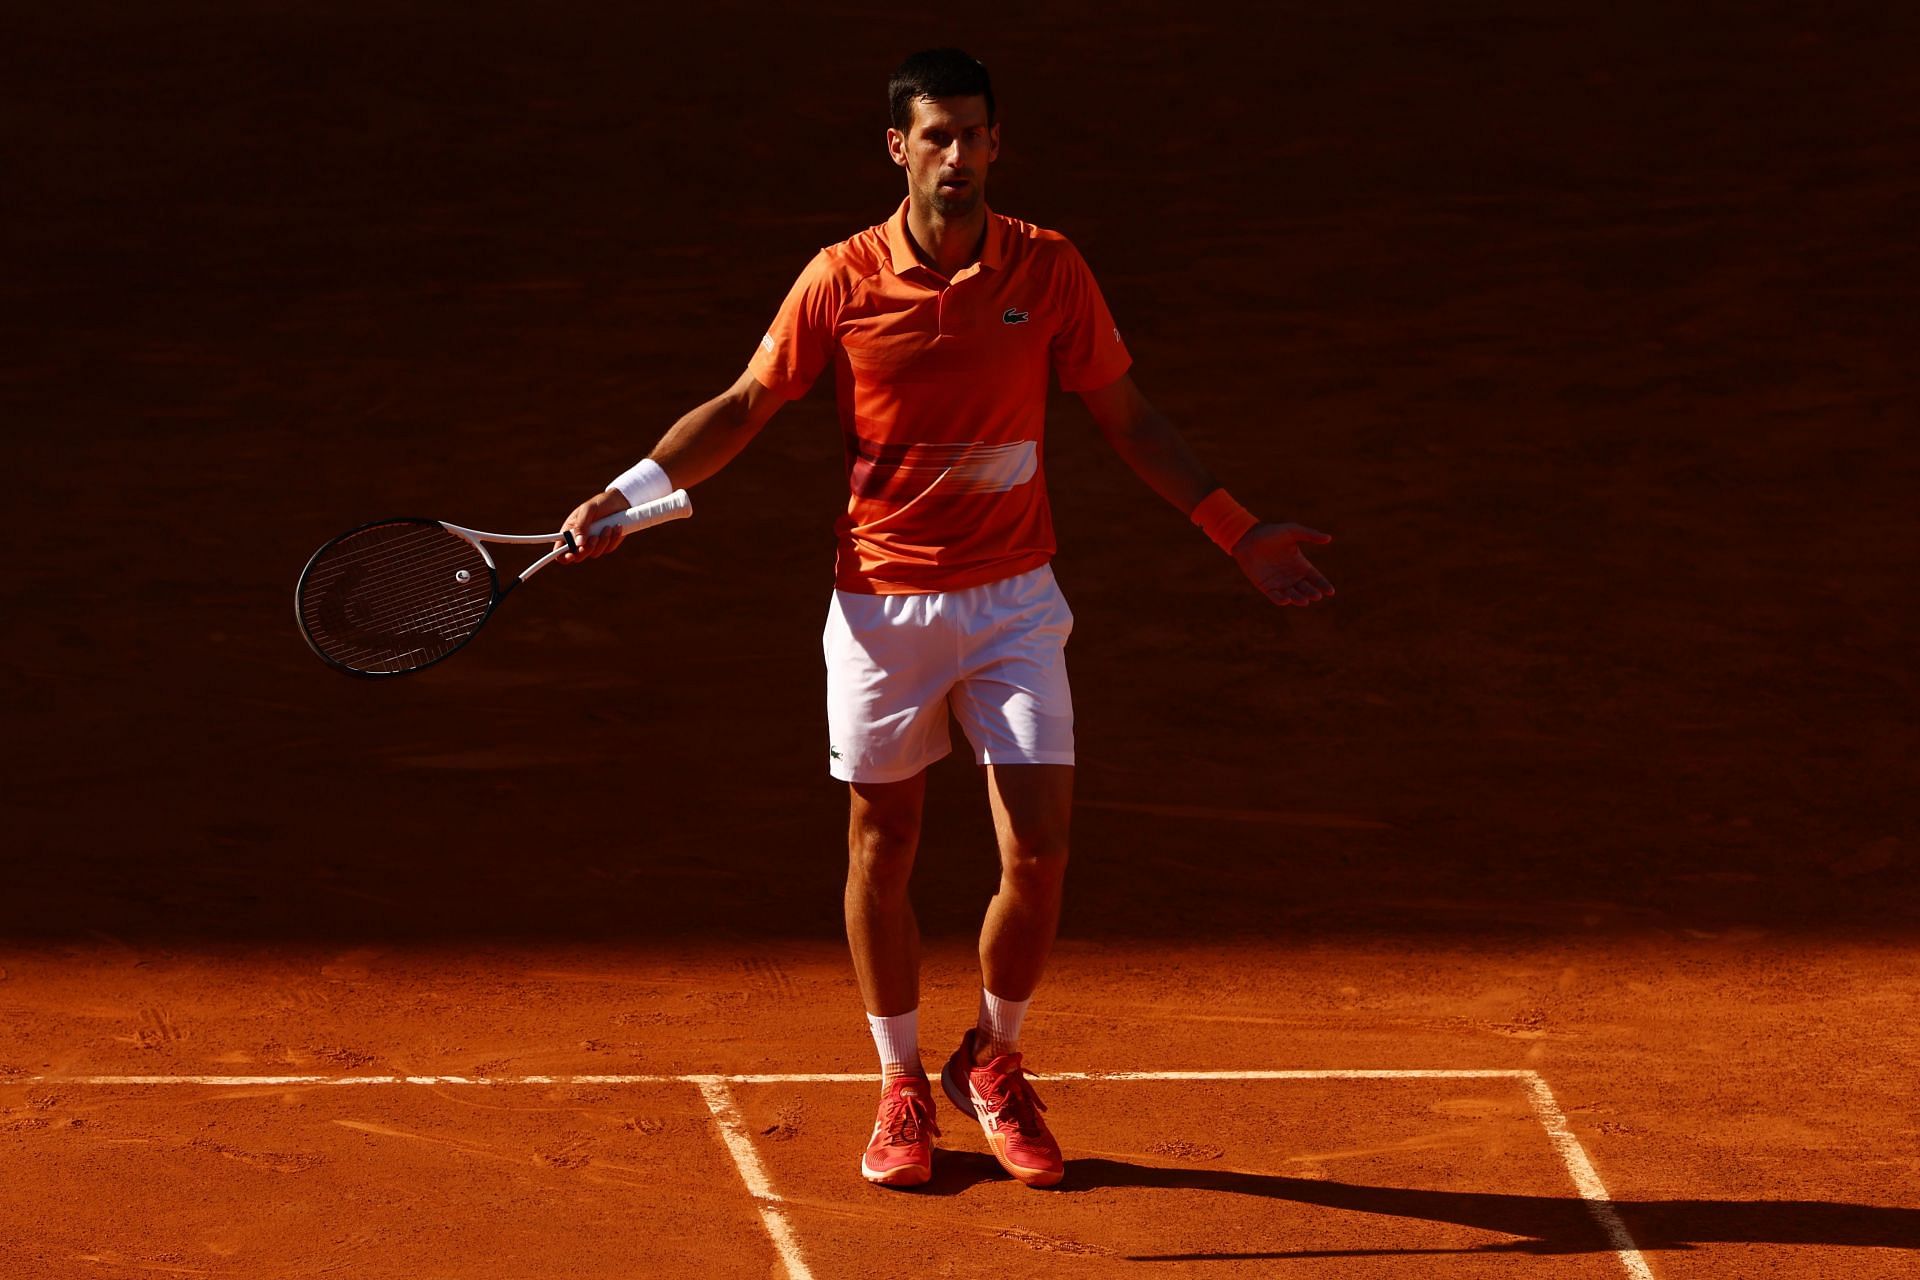 Novak Djokovic will play his quarterfinal match on Day 7 of the Italian Open